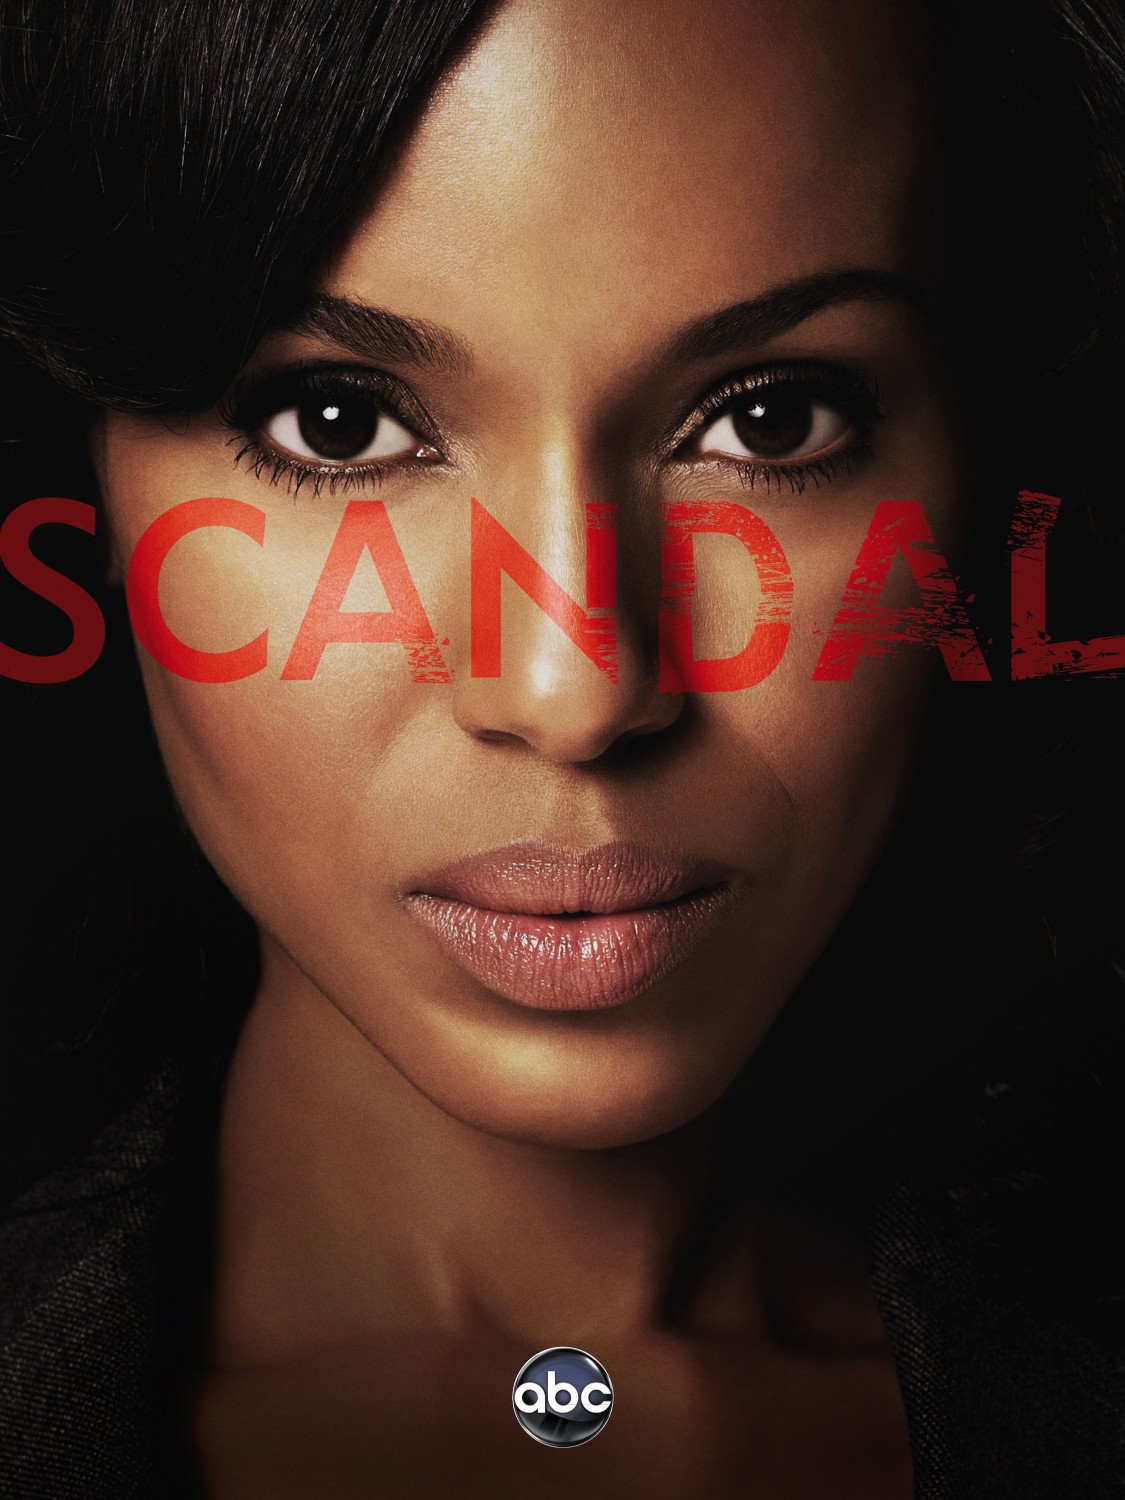 Scandal (1 of 12) Extra Large TV Poster Image IMP Awards